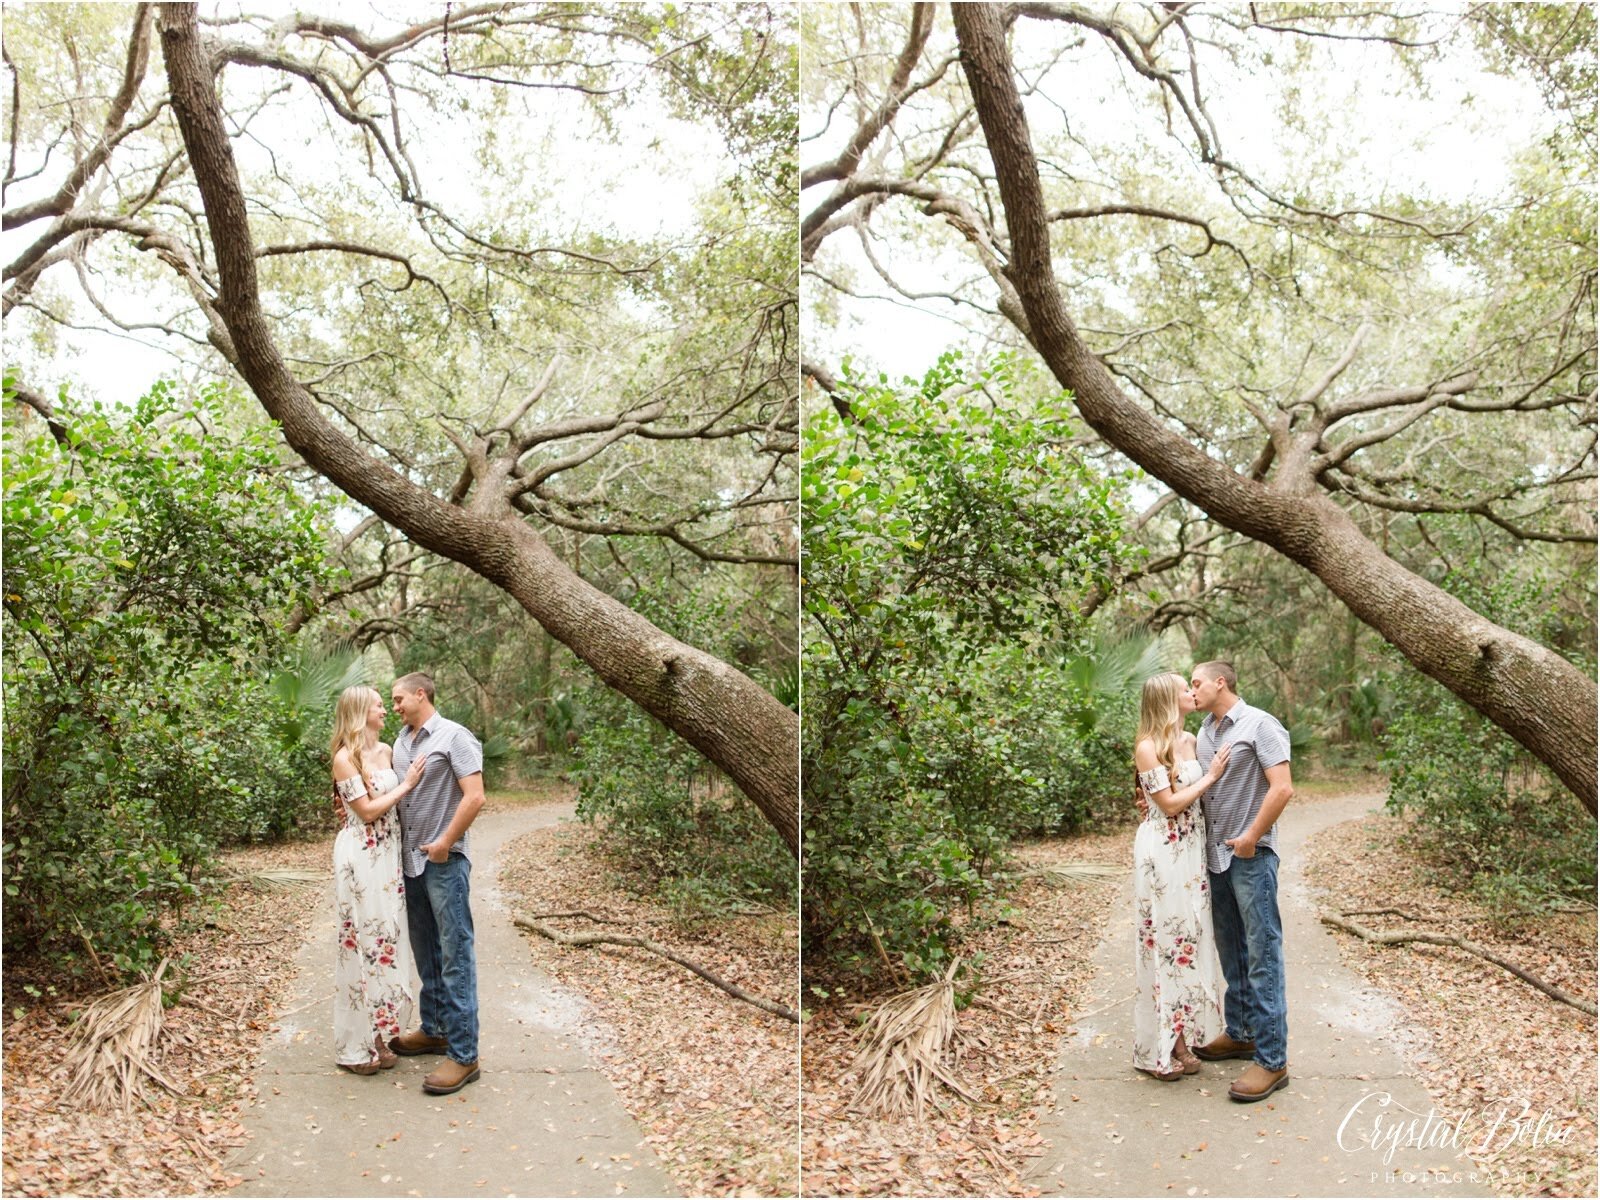 Ashlyn & Kyle | Engagement Photos